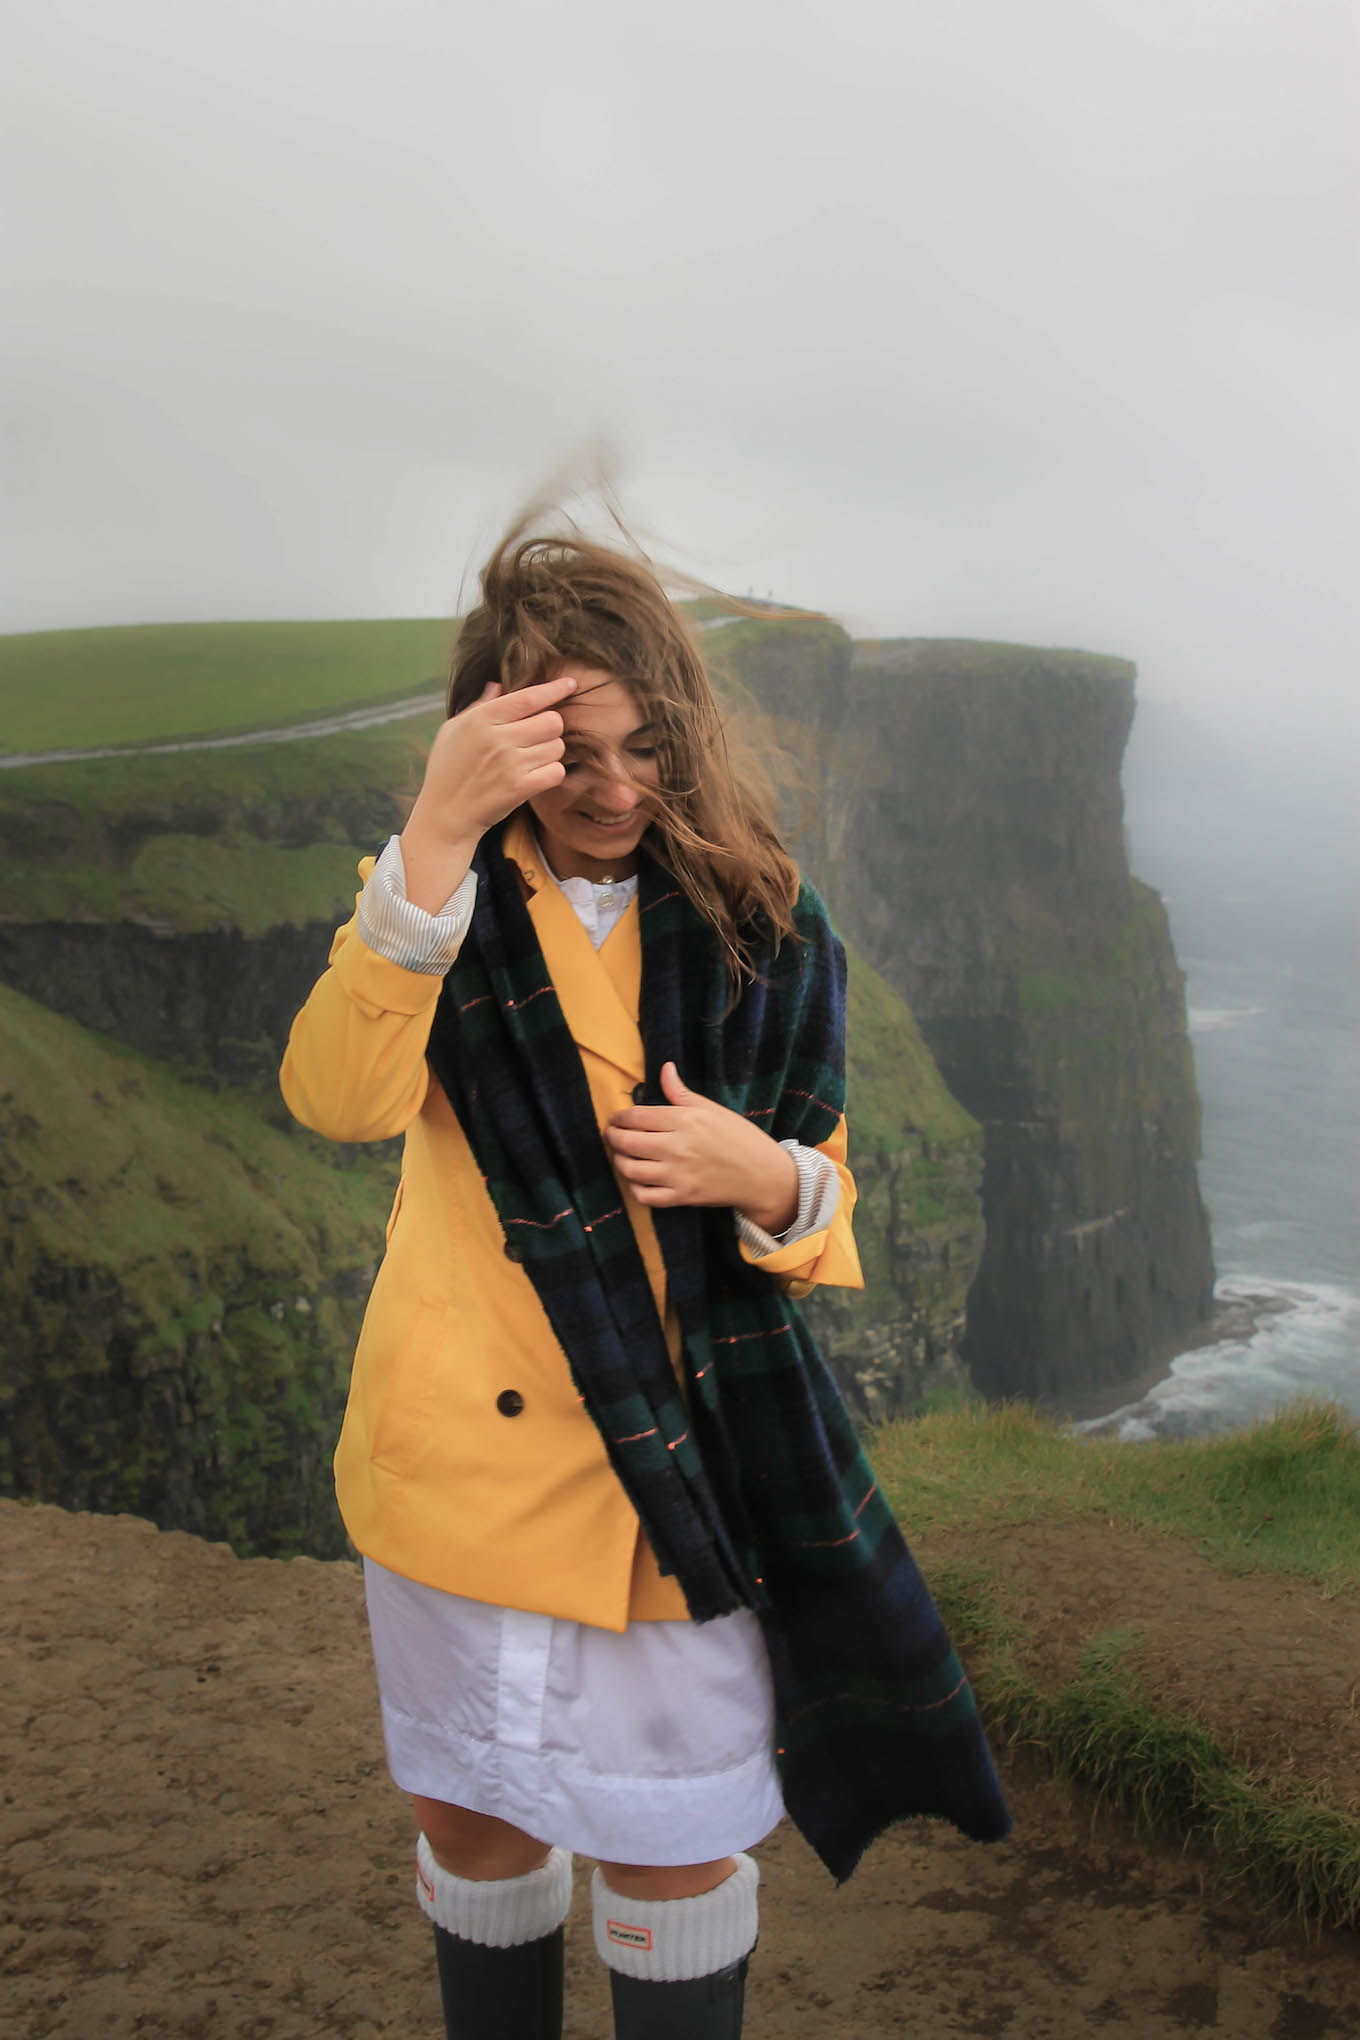 Cliffs of Moher, Ireland | The Coastal Confidence by Aubrey Yandow